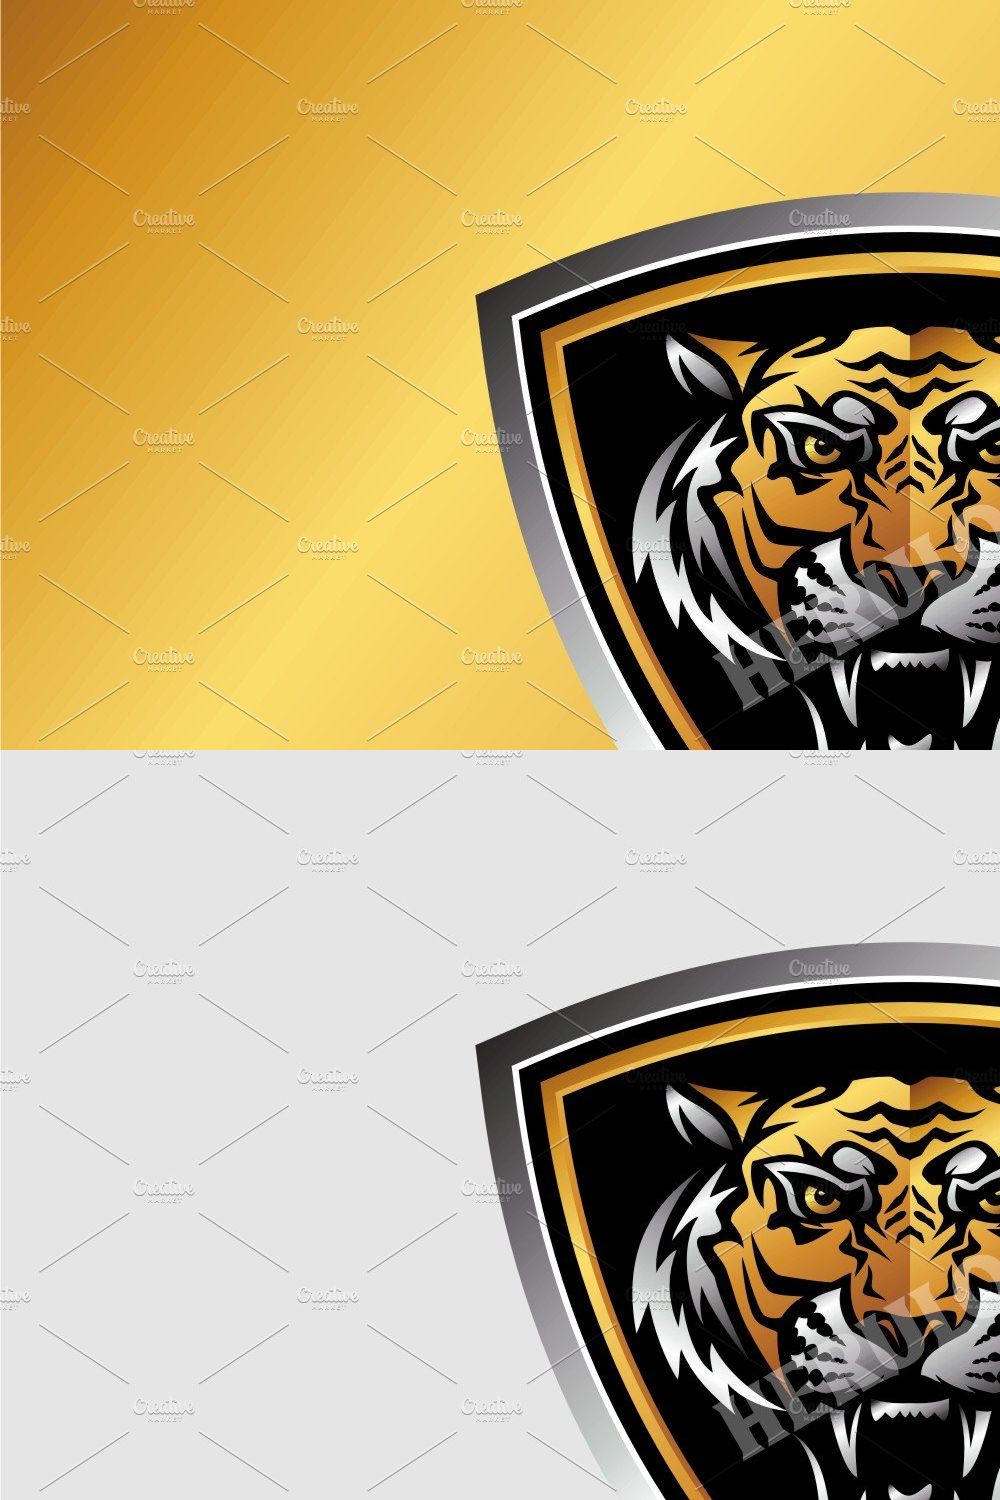 Golden Tiger pinterest preview image.